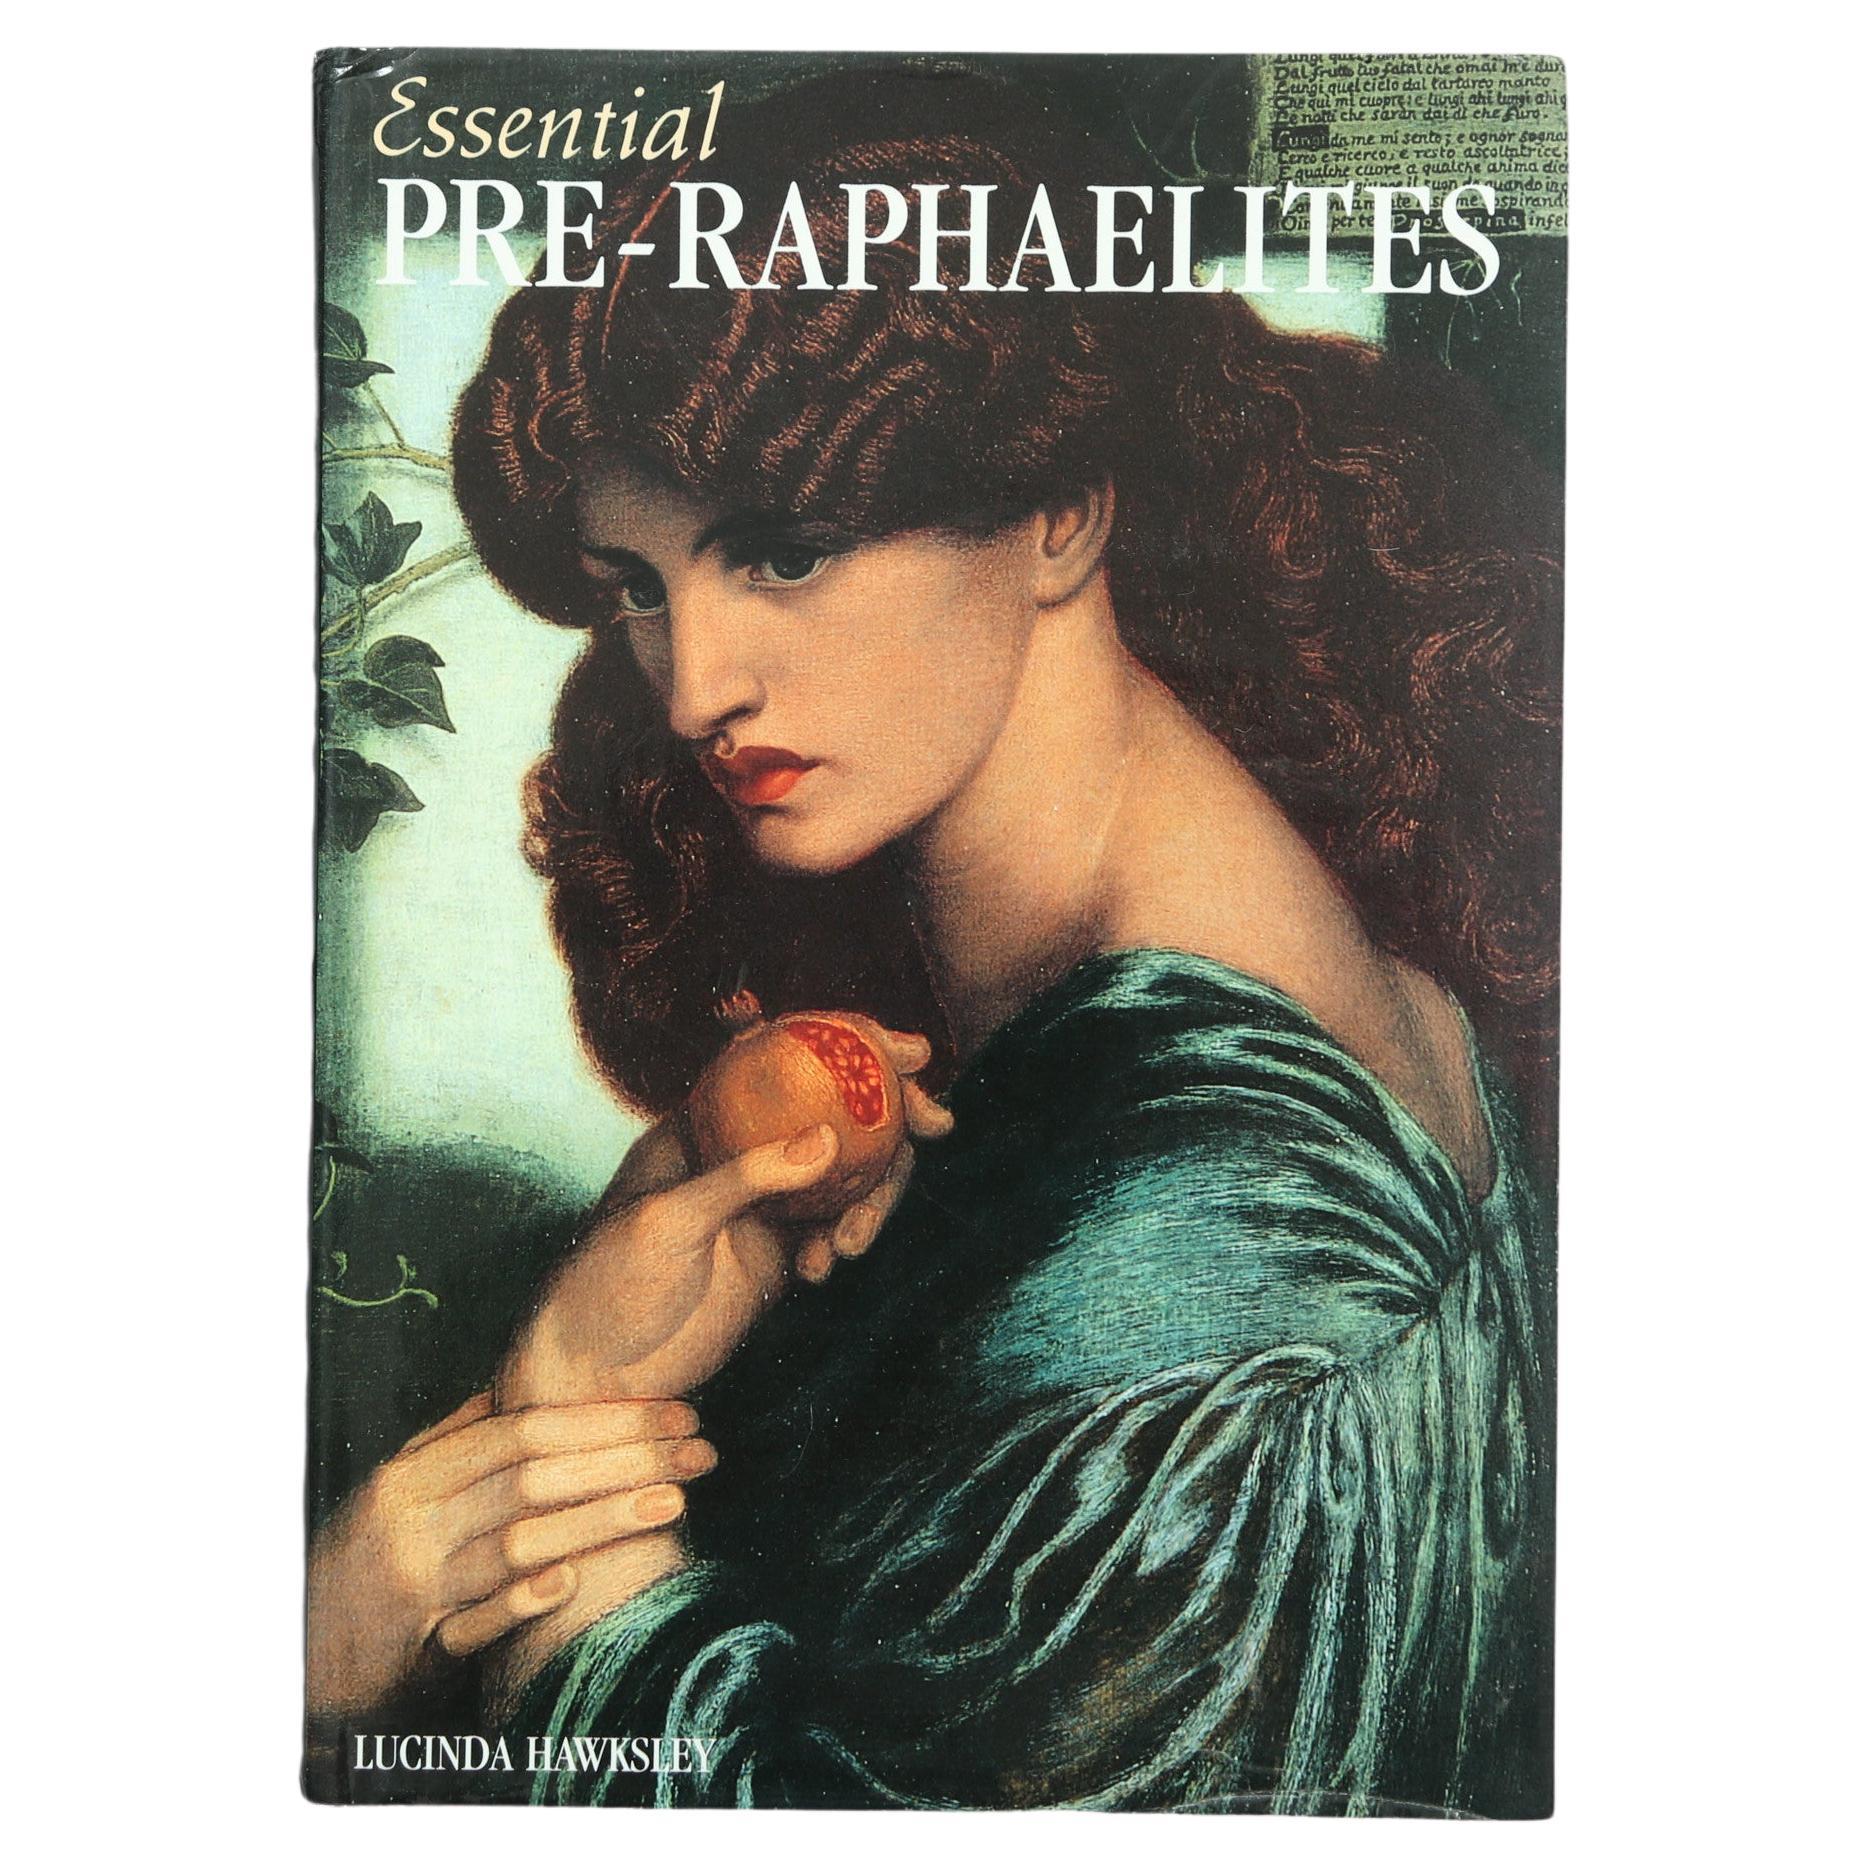 Essential Pre-Raphaelites by Lucinda Hawksley For Sale